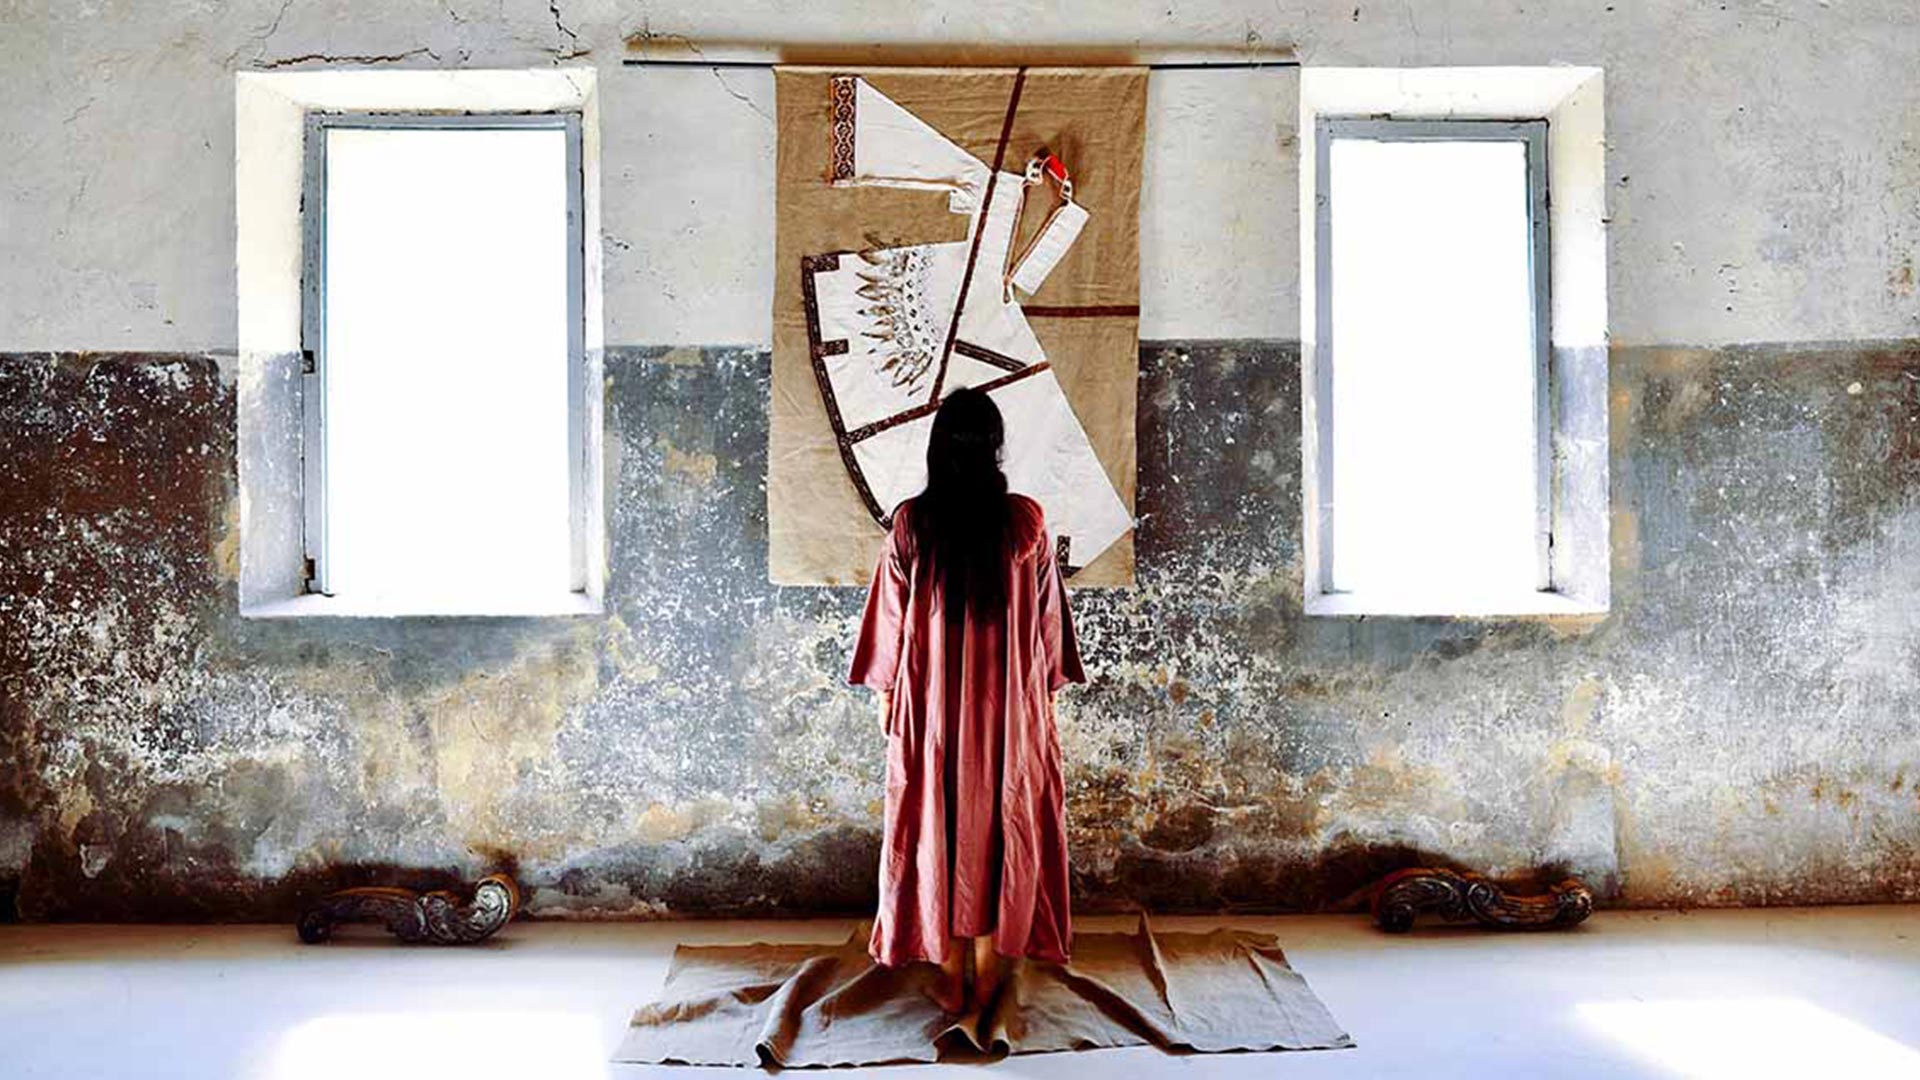 House of Ita&rsquo;s Trasposizioni Collection explores femininity through tapestry